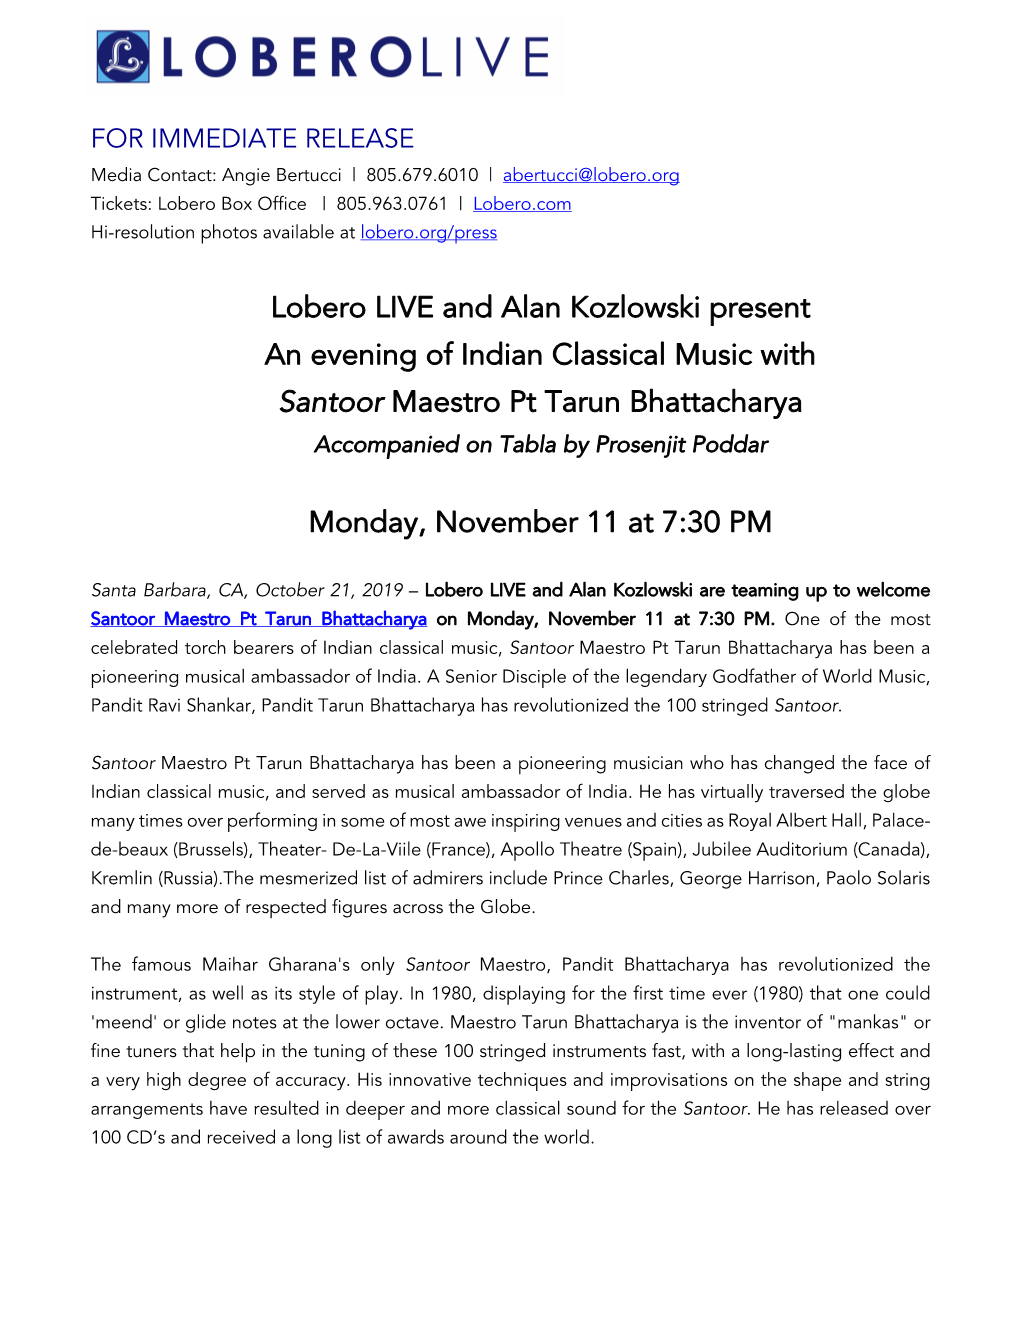 Lobero LIVE and Alan Kozlowski Present an Evening of Indian Classical Music with Santoor Maestro Pt Tarun Bhattacharya Accompanied on Tabla by Prosenjit Poddar